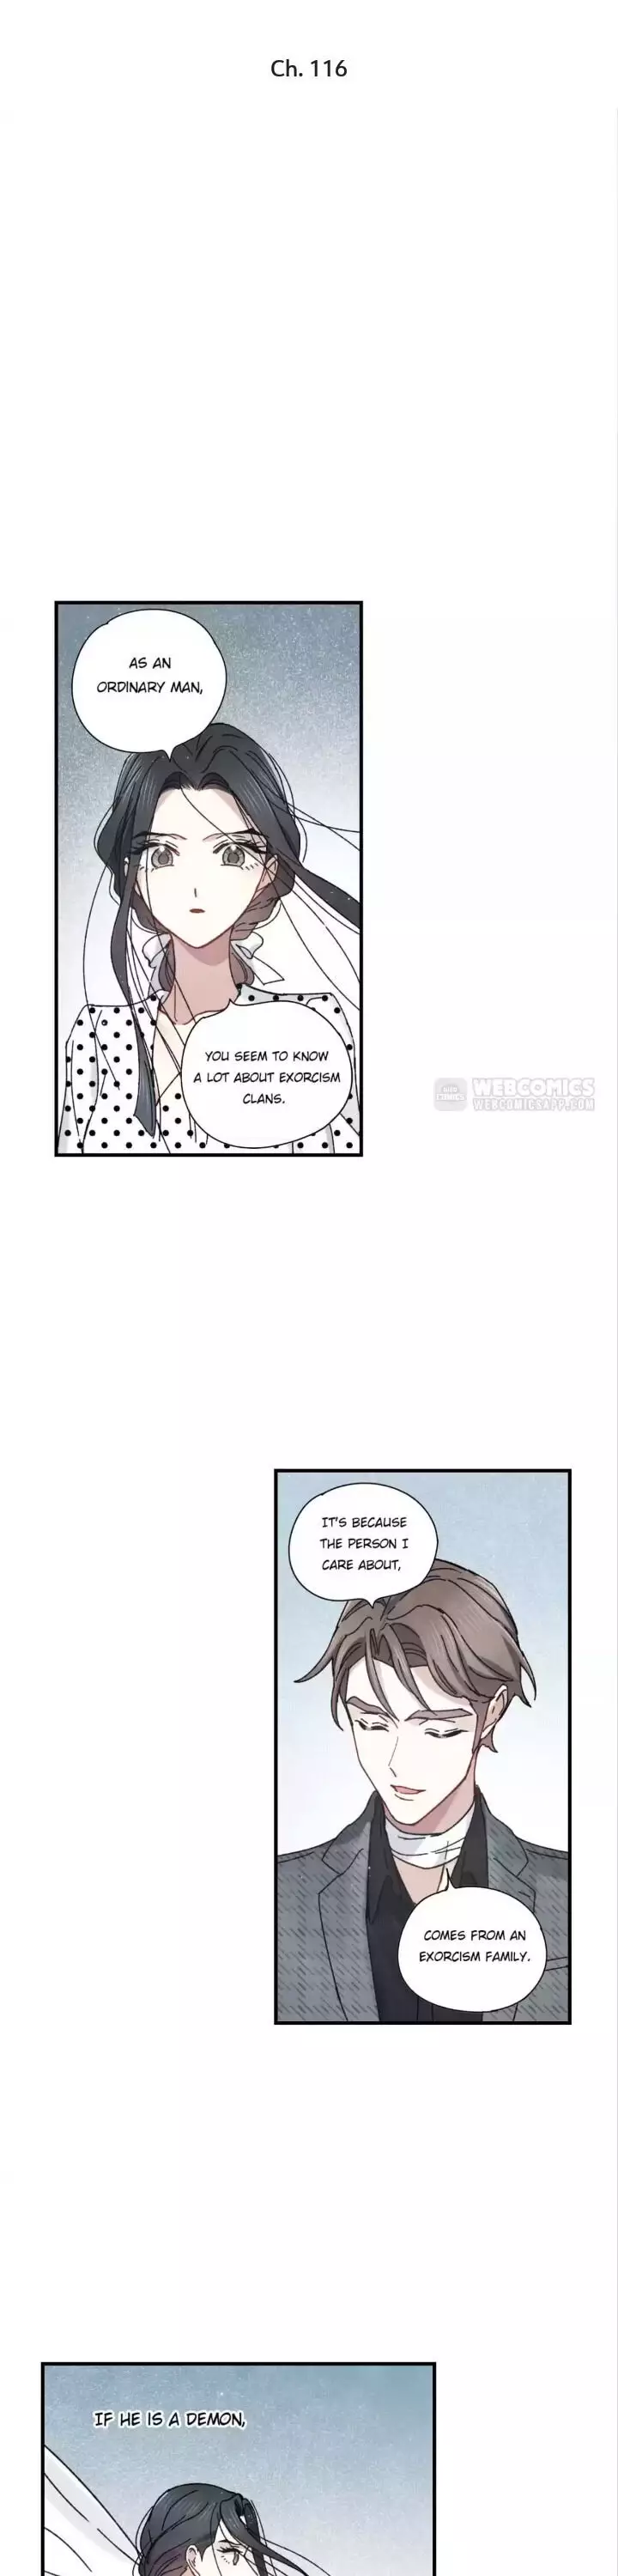 Mejaz Regulus In The World – Webtoon - 116 page 1